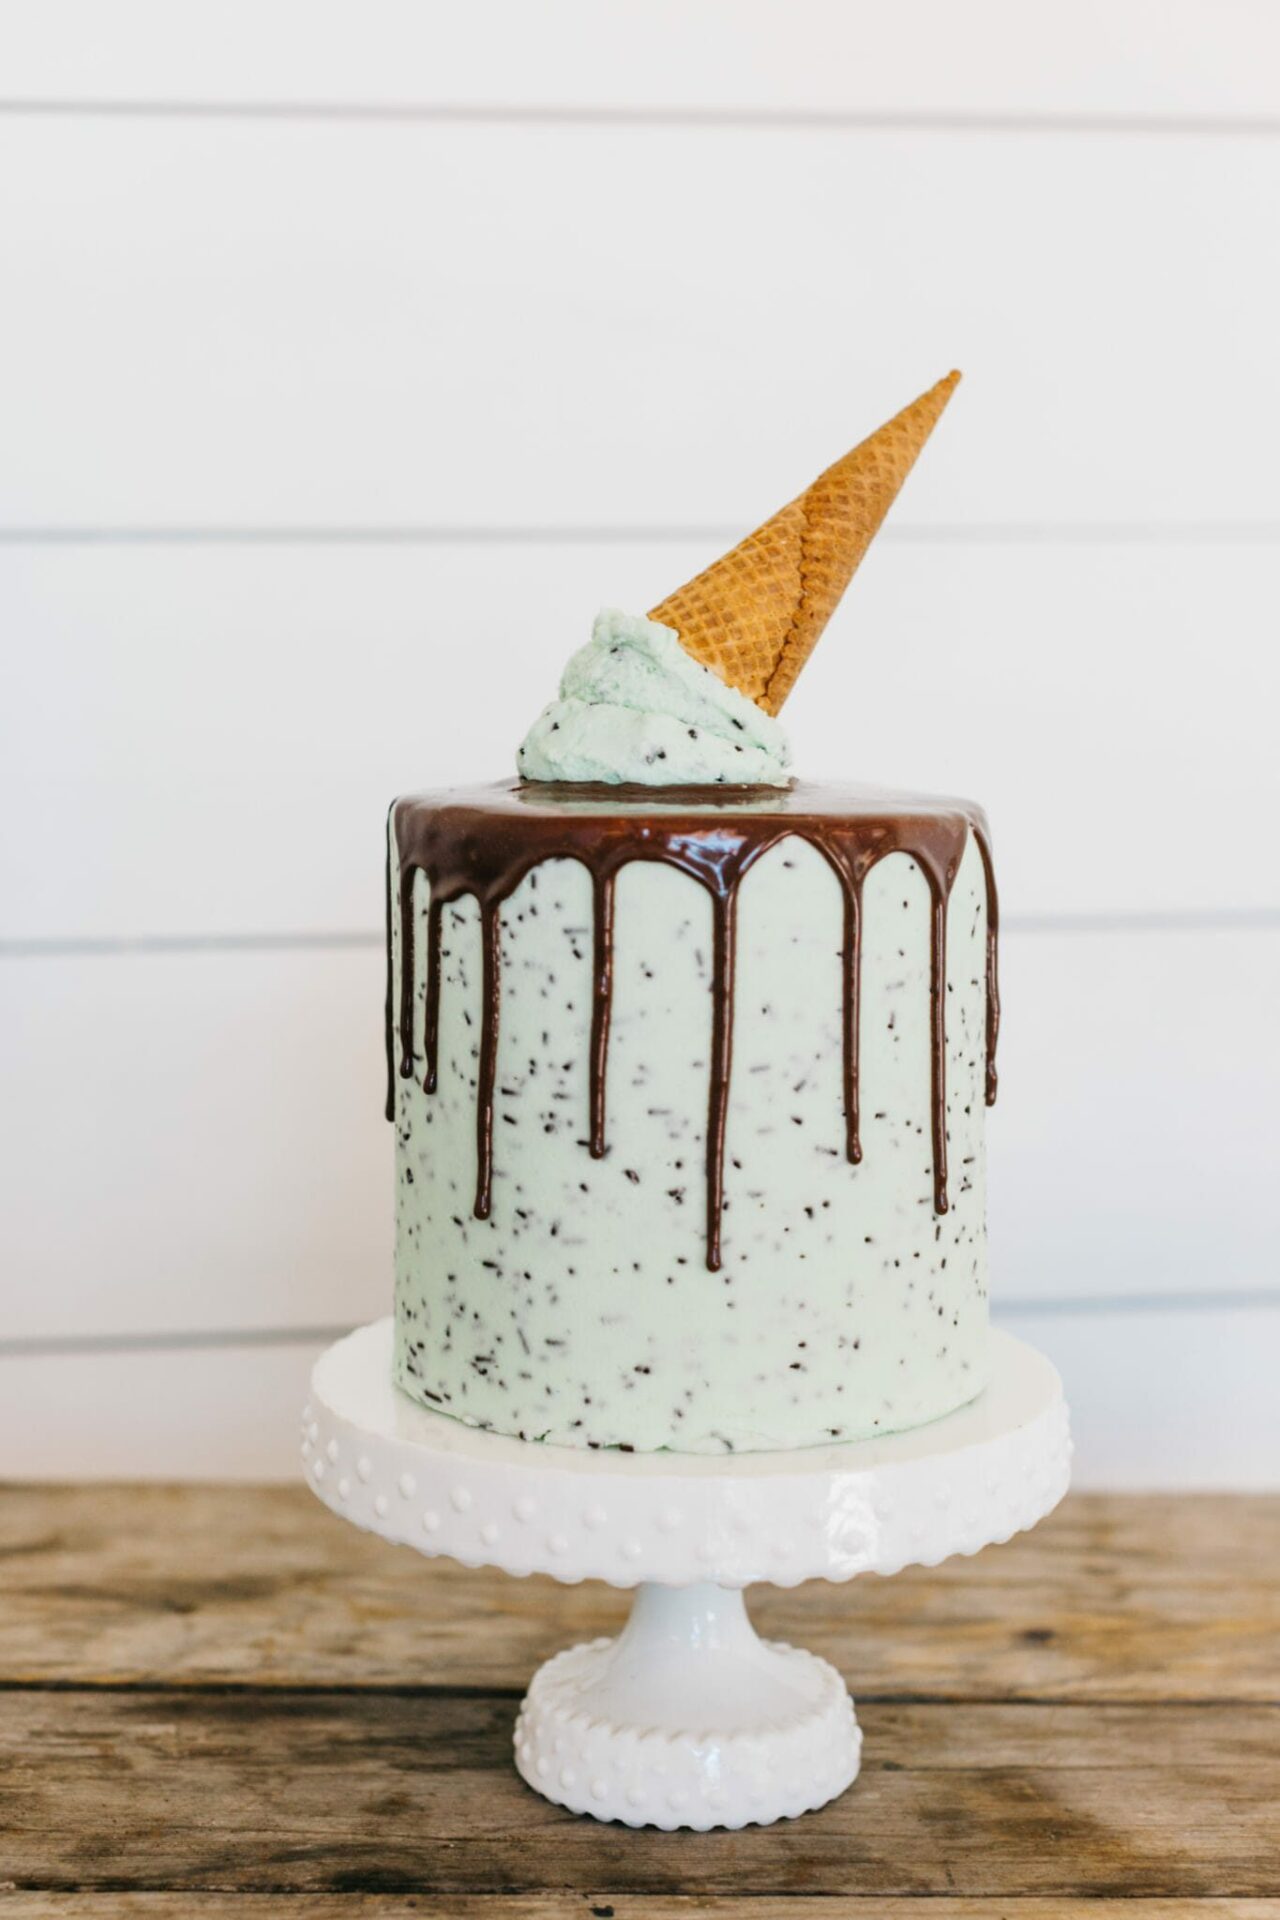 Ice Cream Social | ice cream inspired desserts | ice cream cakes | ice cream cookies || JennyCookies.com #recipe #icecream #cookies #cakes #summerdesserts #icecreamdesserts #summer #jennycookies